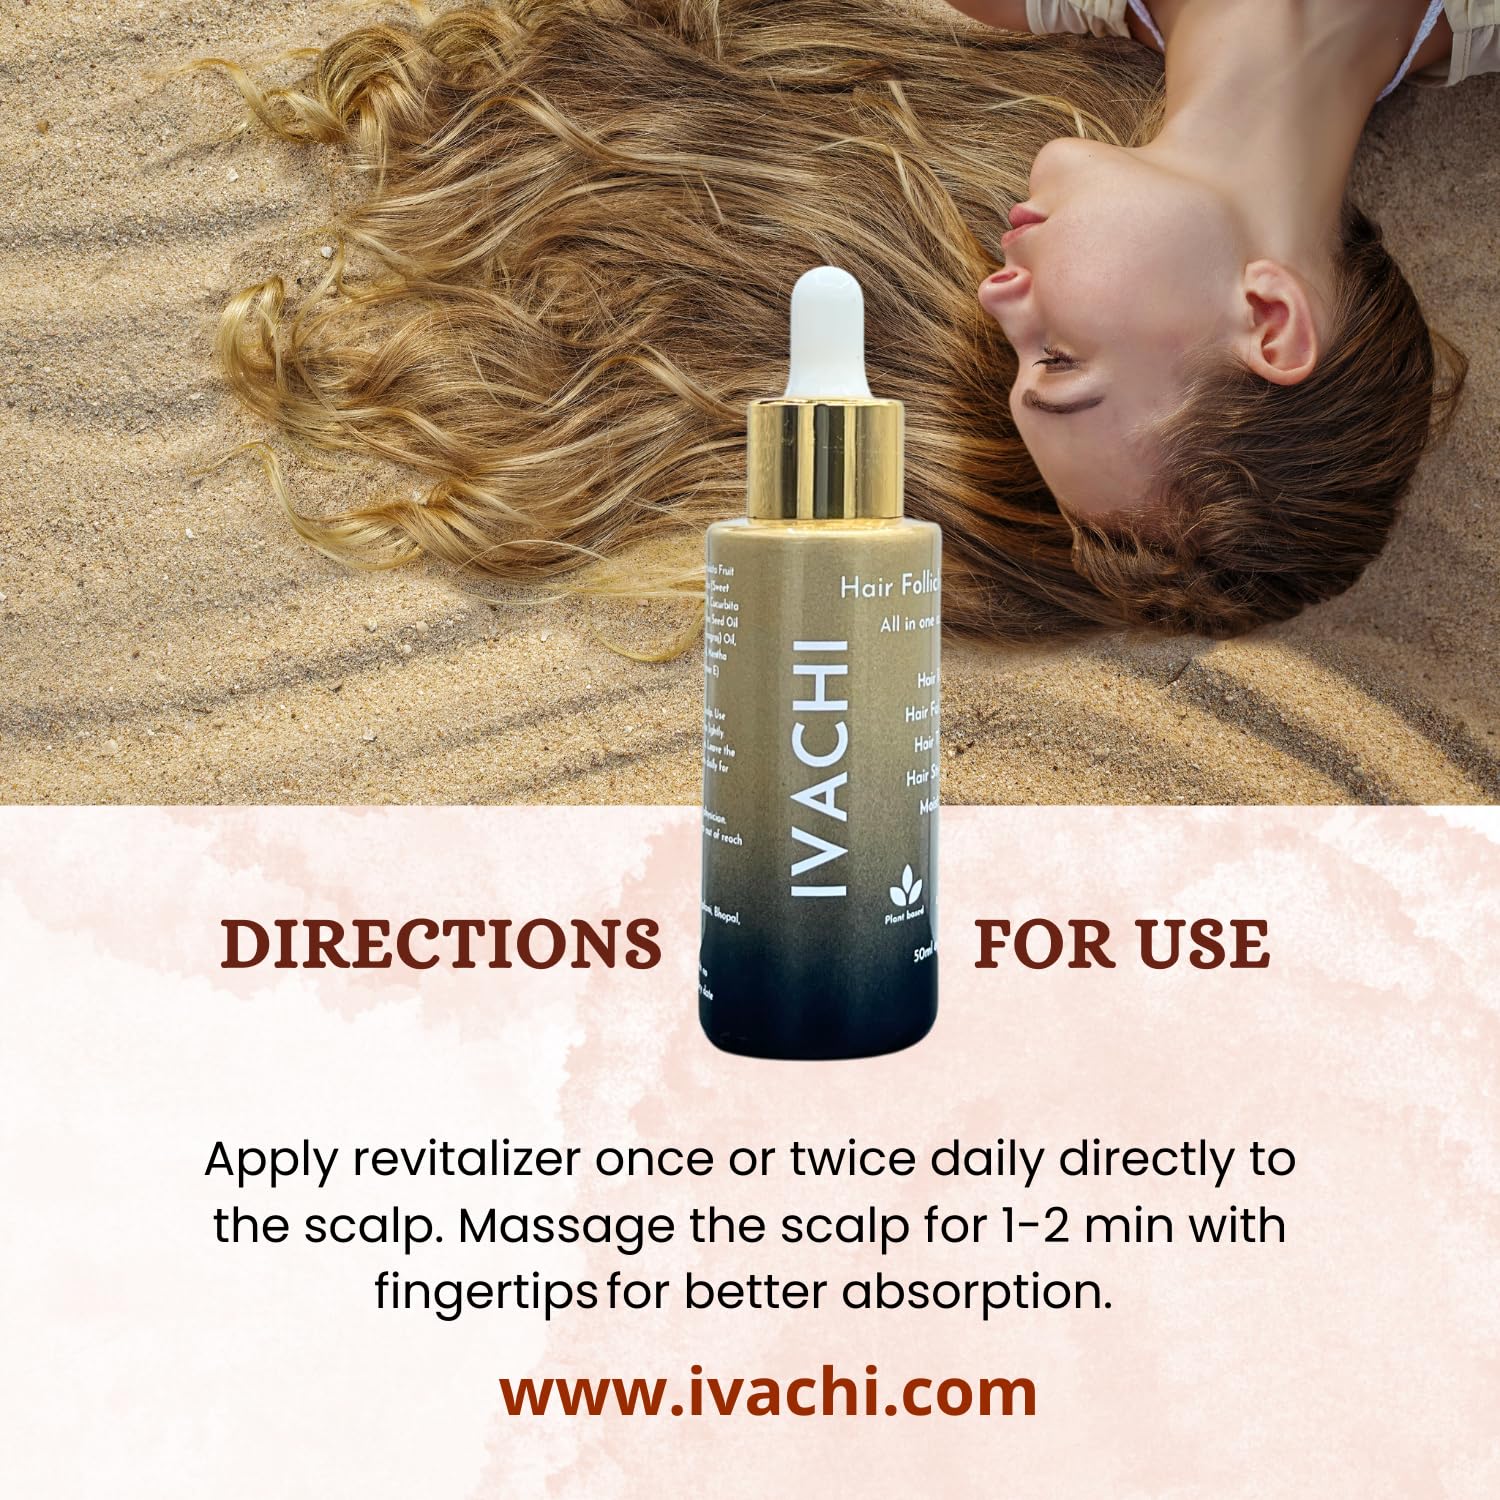 IVACHI Hair Follicle Revitalizer For Hair Growth, Hair Fall Control & Healthy Hair | Saw Palmetto, Rmary, Peppermint, Bhringraj For Men & Women | 50ml